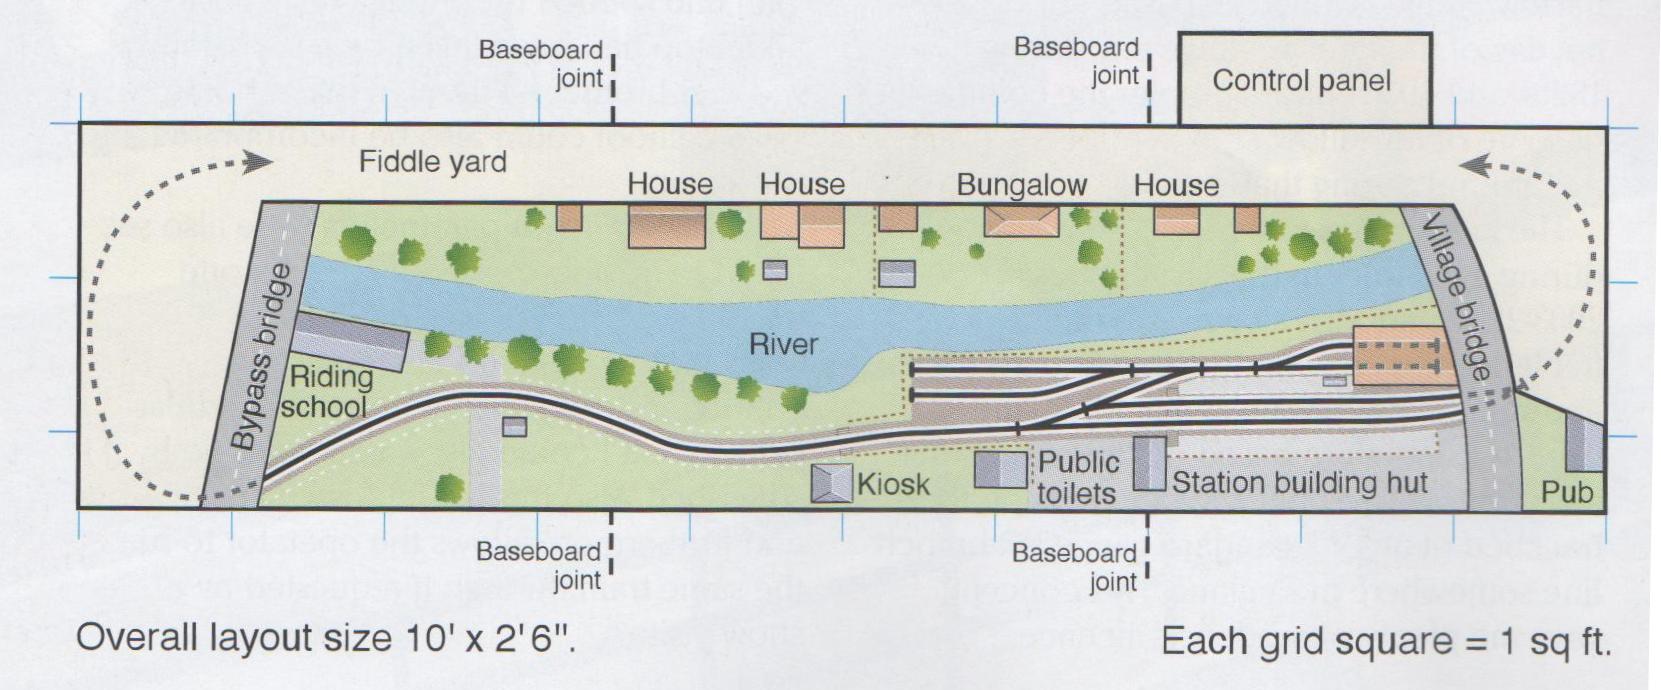 009 model railway layout plans